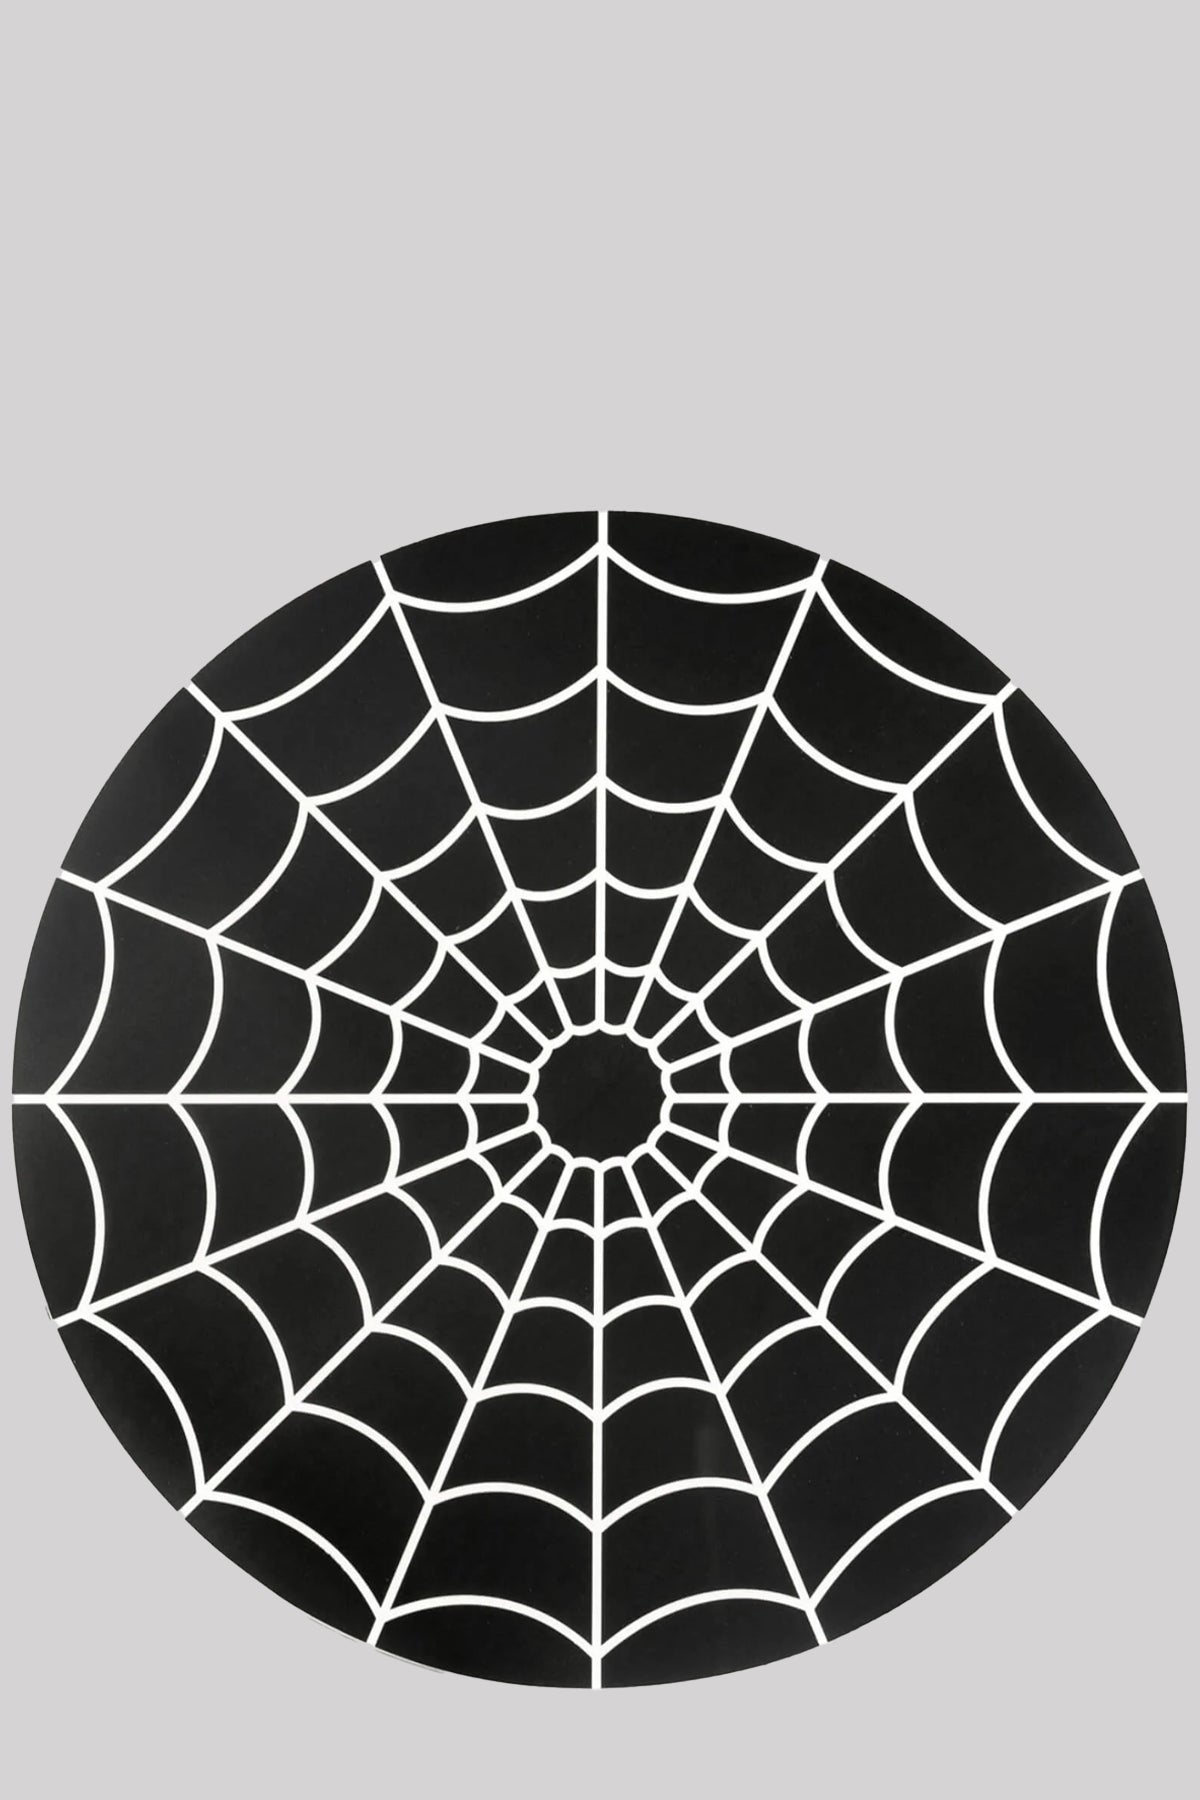 Sourpuss Spiderweb Round Ceramic Trivet Chopping Board